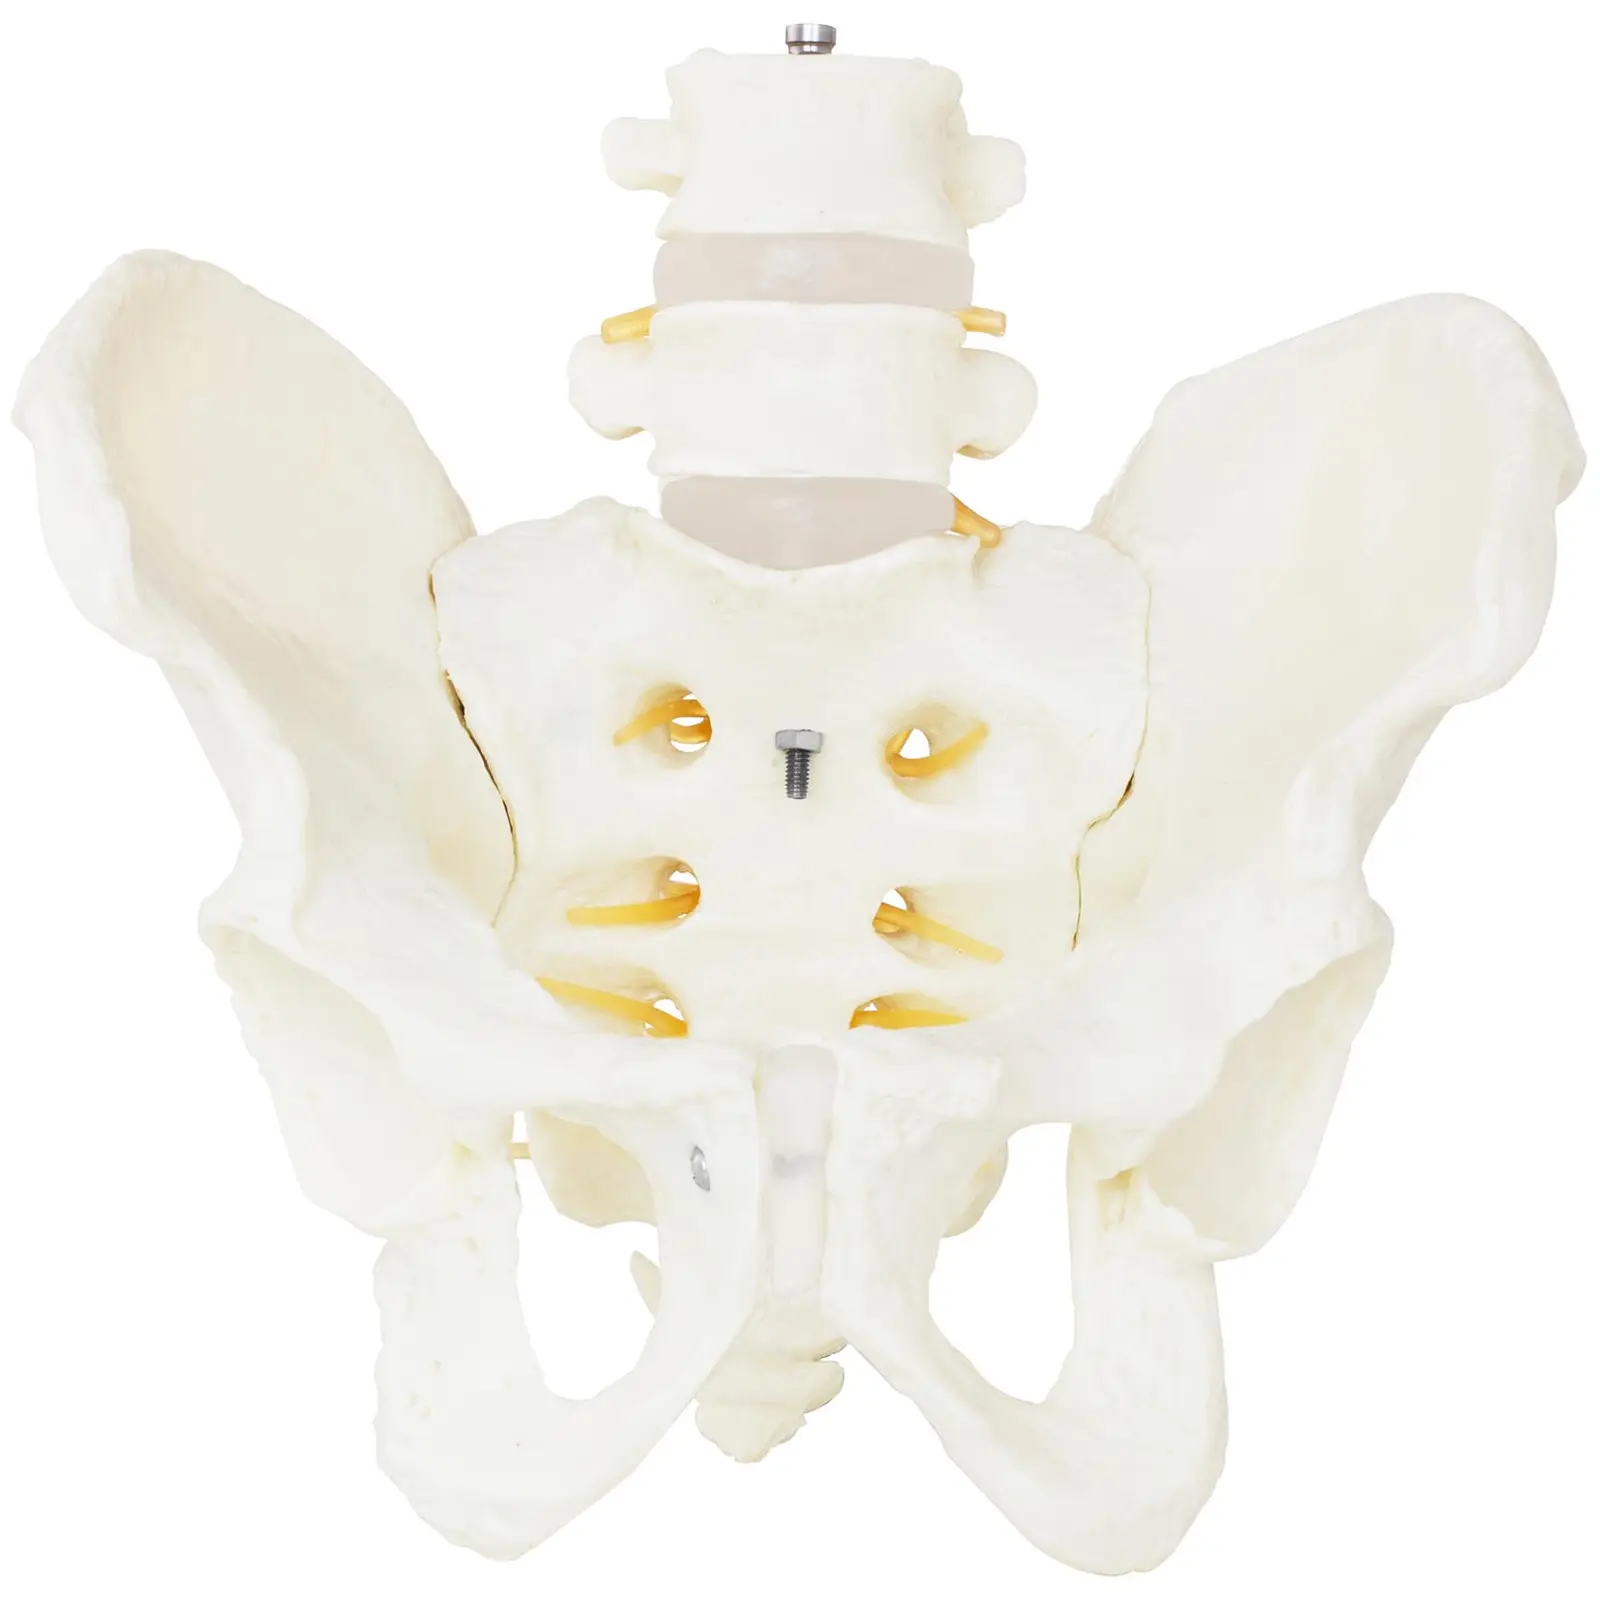 Pélvis com vértebras lombares - modelo anatómico